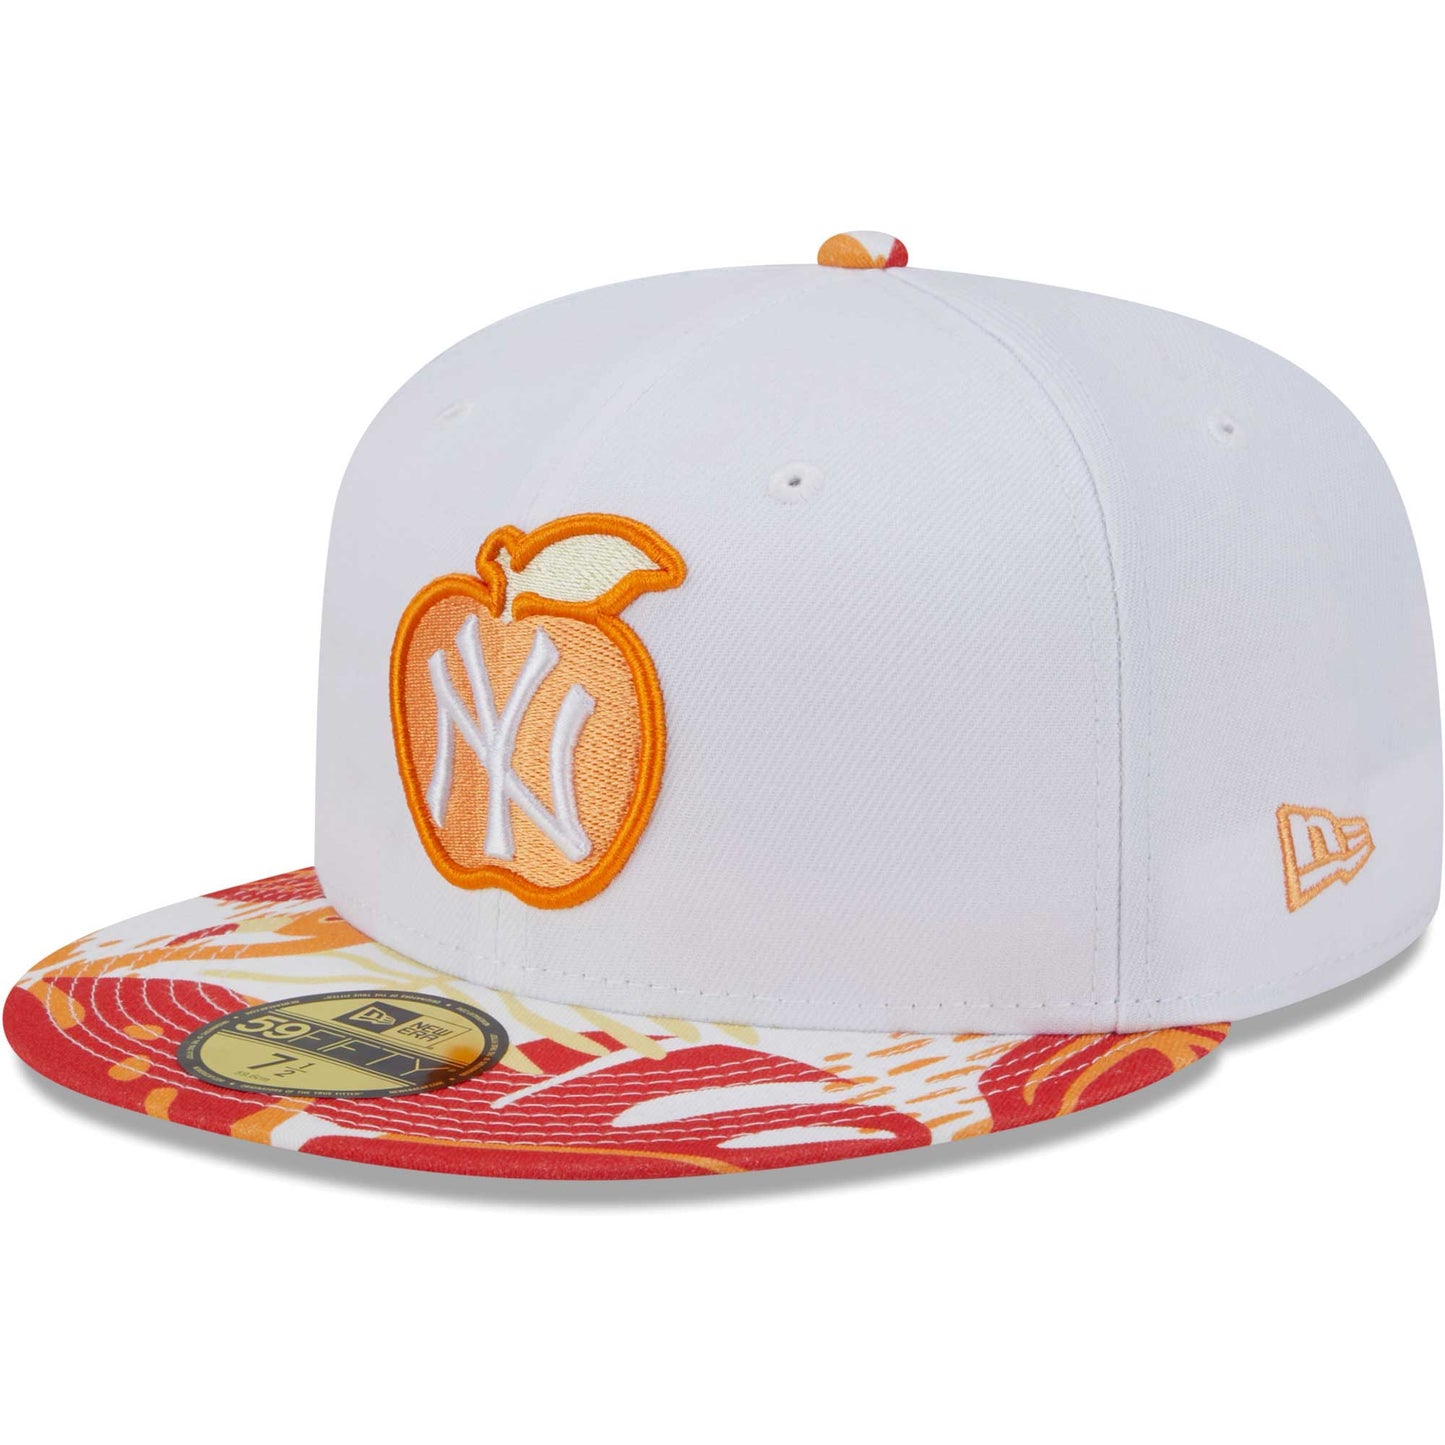 New York Yankees New Era Flamingo 59FIFTY Fitted Hat - White/Orange